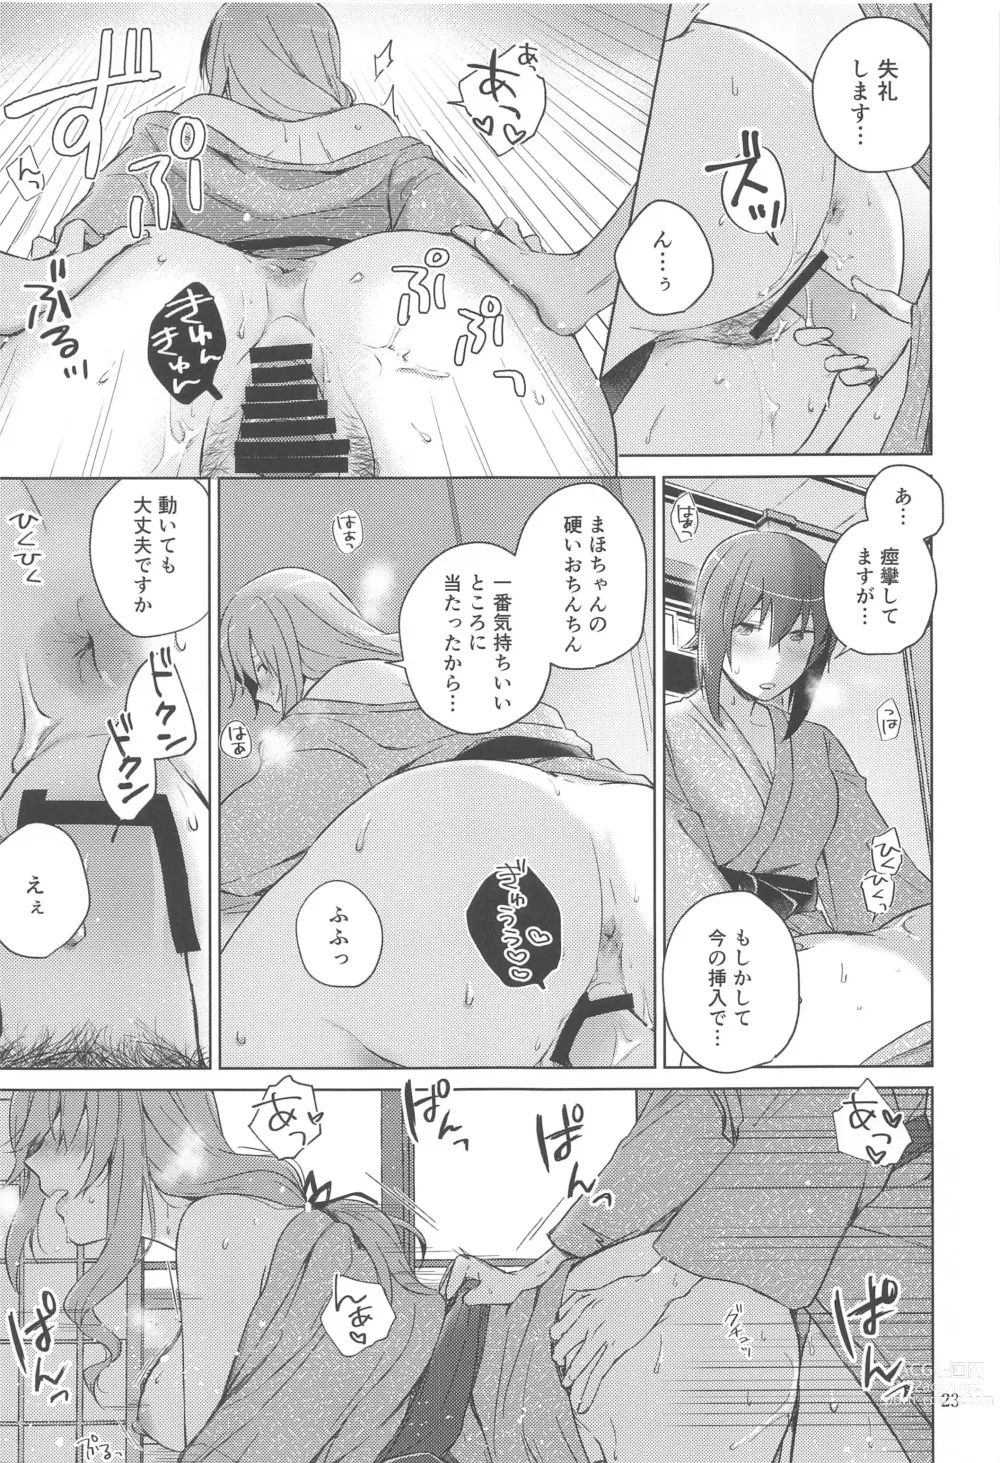 Page 22 of doujinshi Nishizumi to Shimada 2